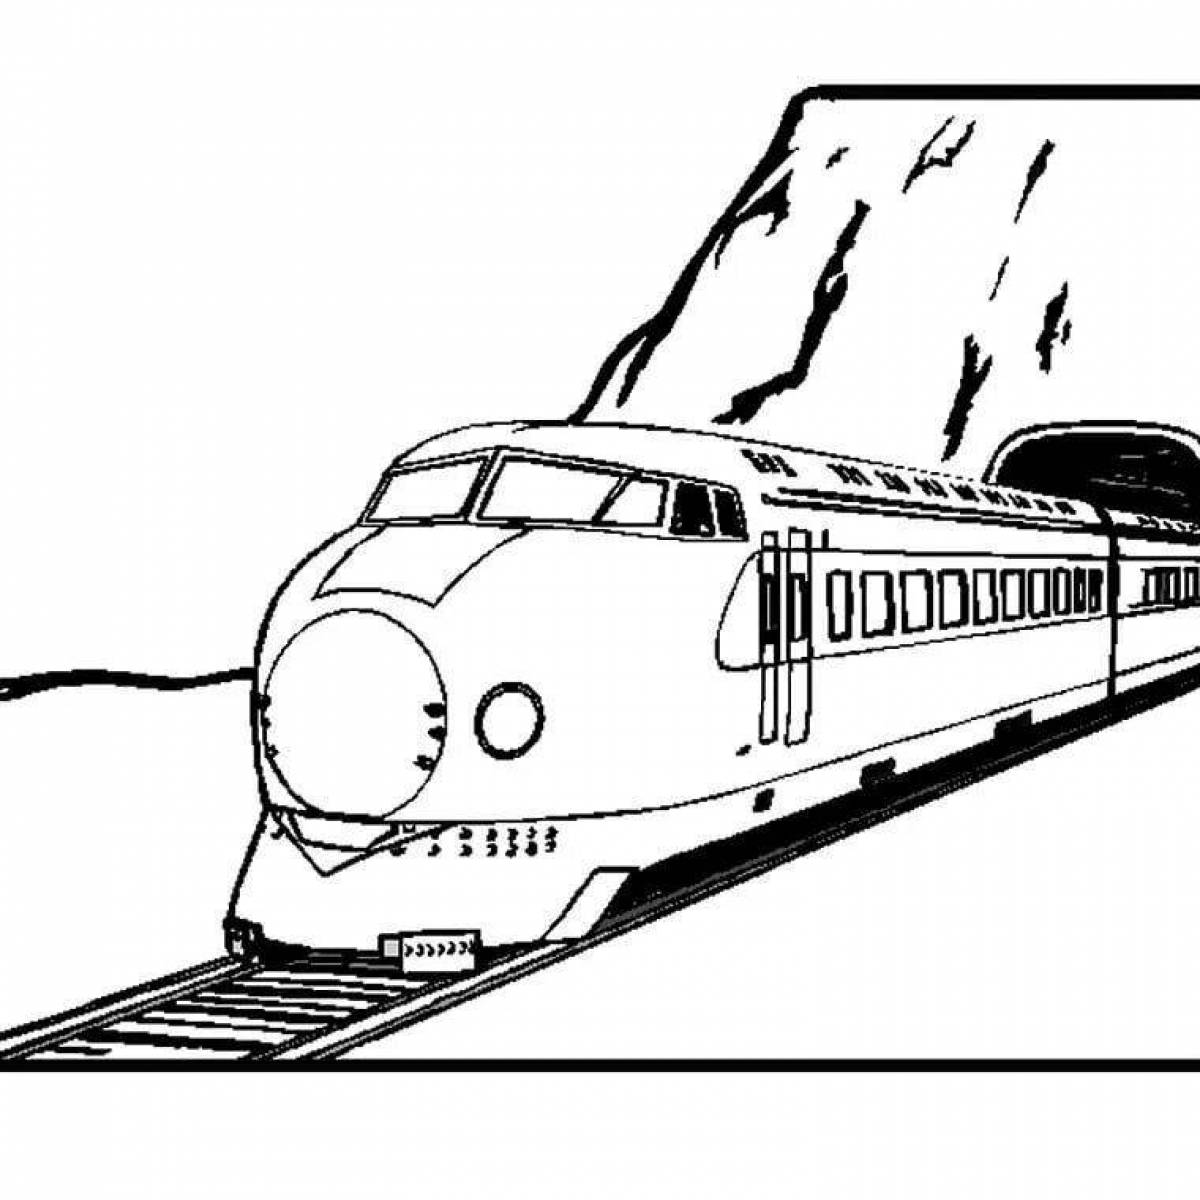 Fun coloring book with electric train